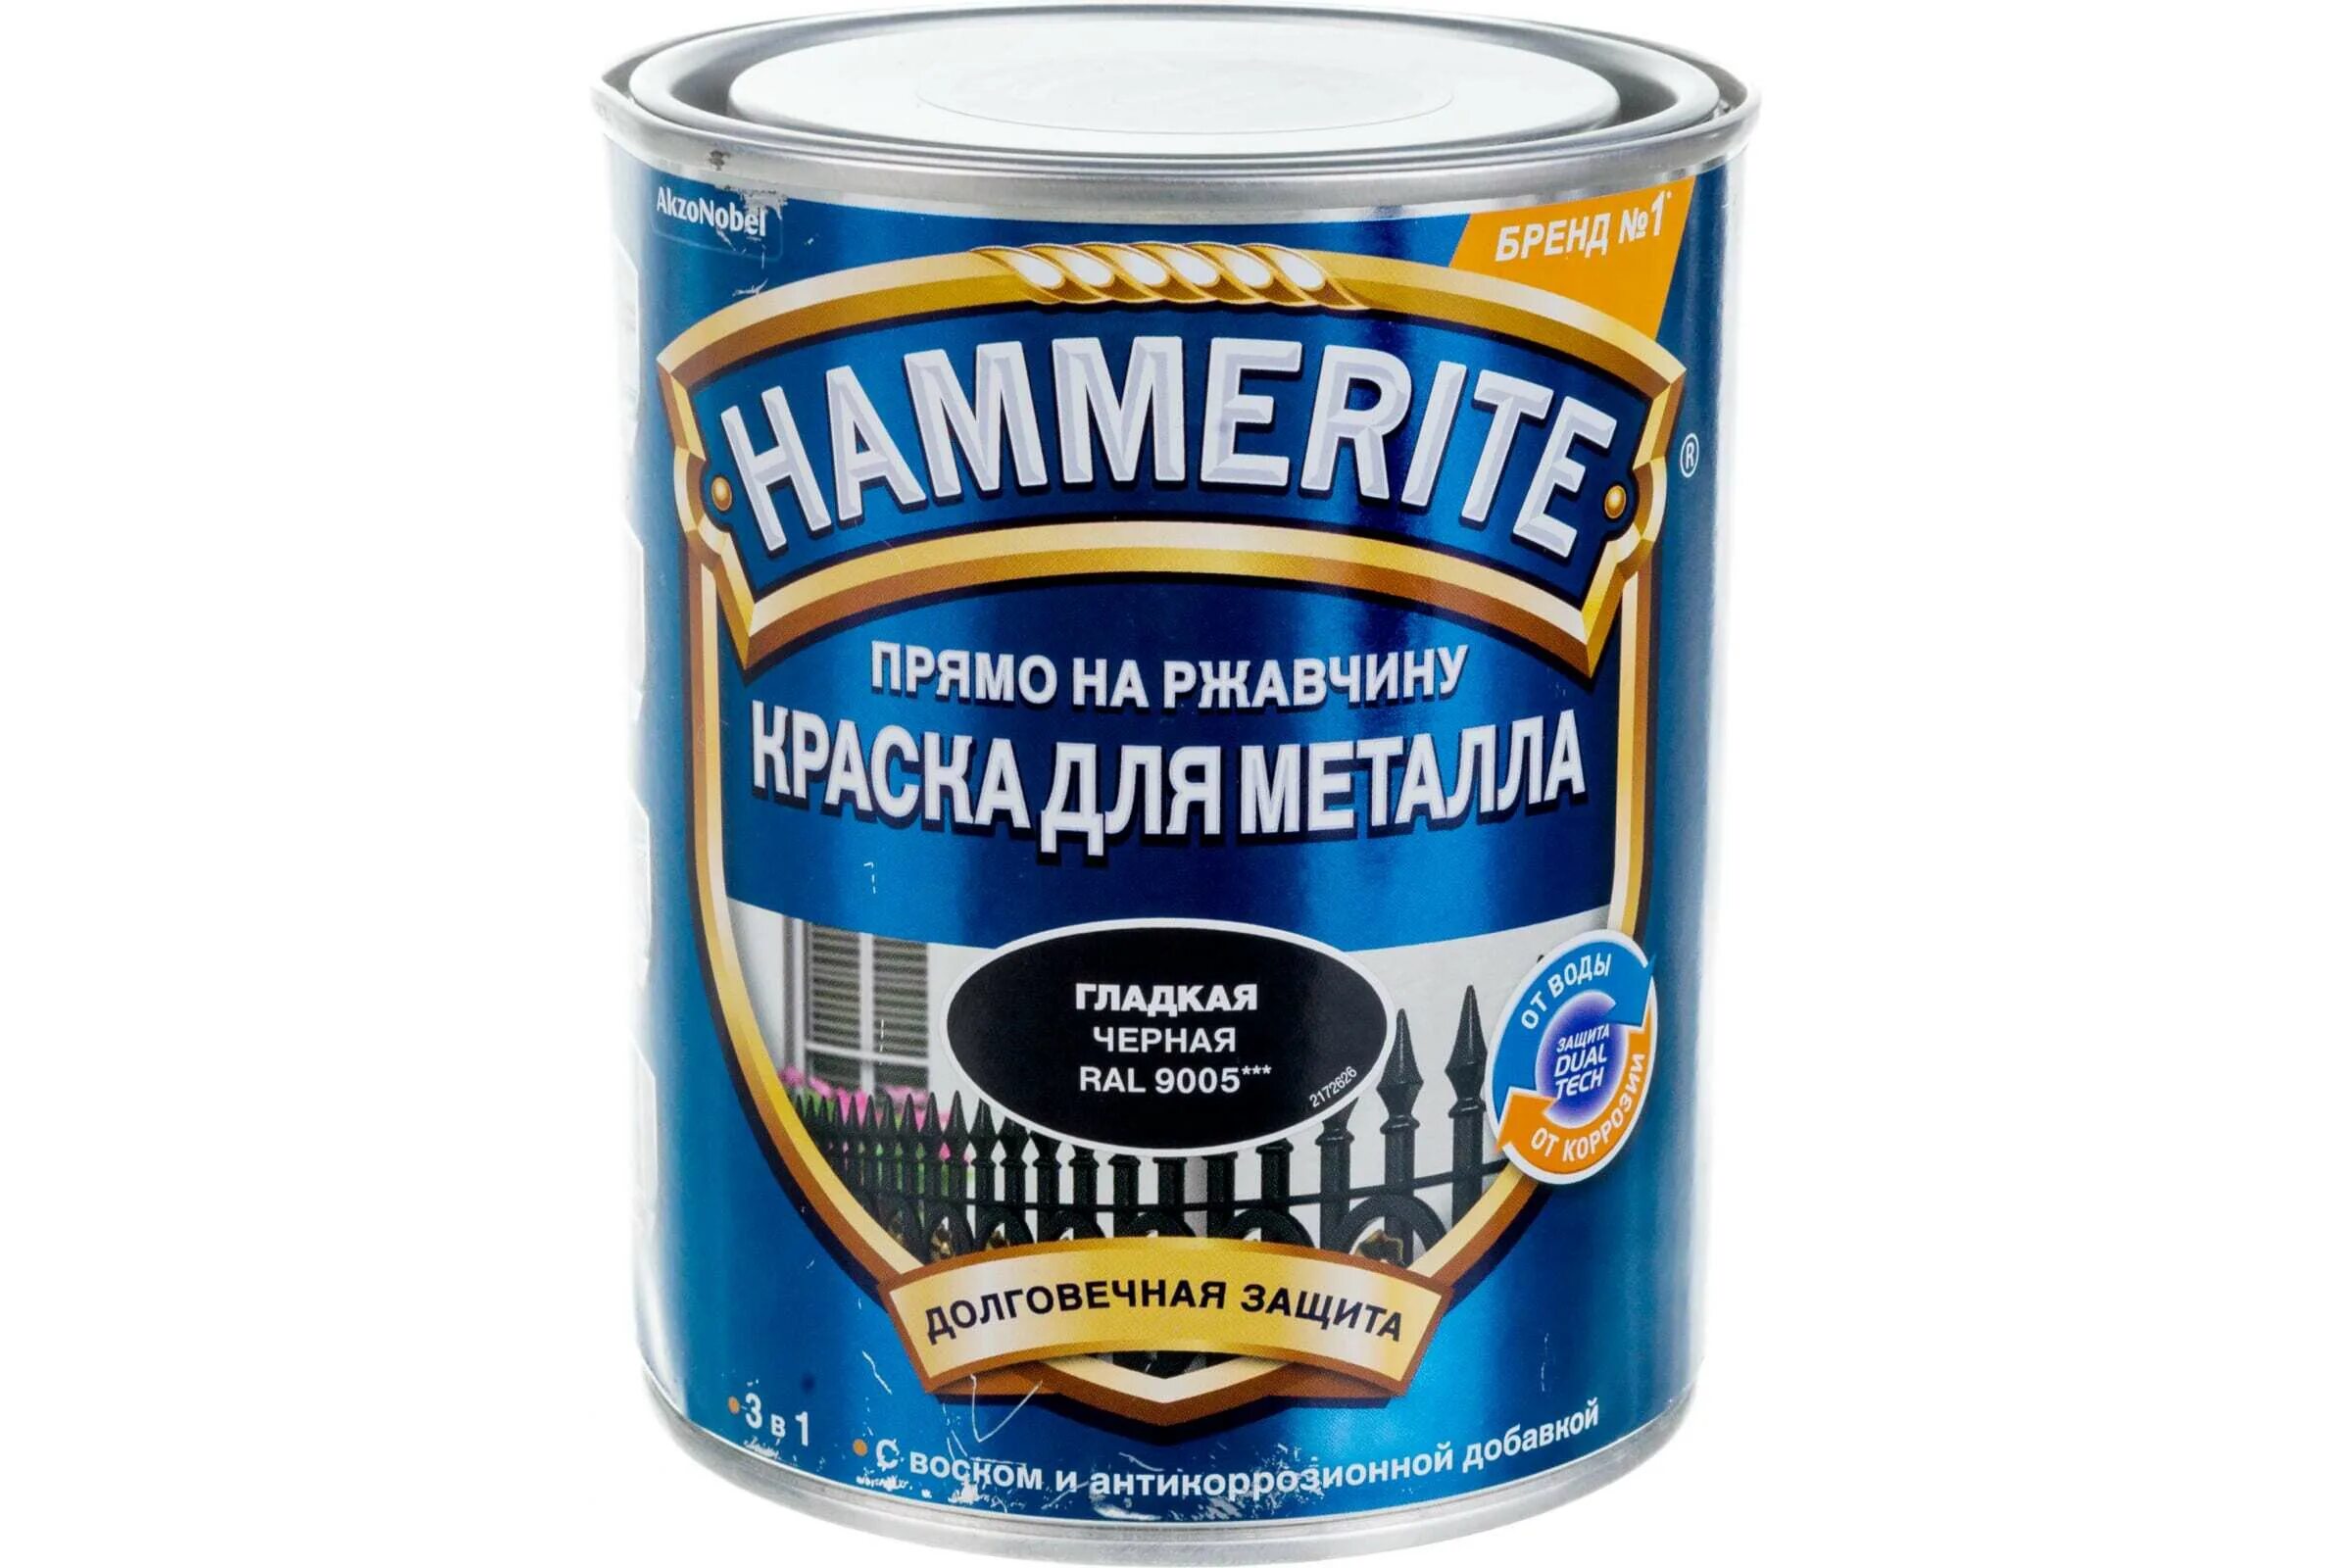 Краска по ржавчине черная цена. Hammerite smooth гладкая эмаль по ржавчине белая 0.75 л.. Краска Хаммерайт по металлу и ржавчине черная. Эмаль алкидная молотковая черная 0,75л Hammerite. Краска Hammerite молотковая черная.